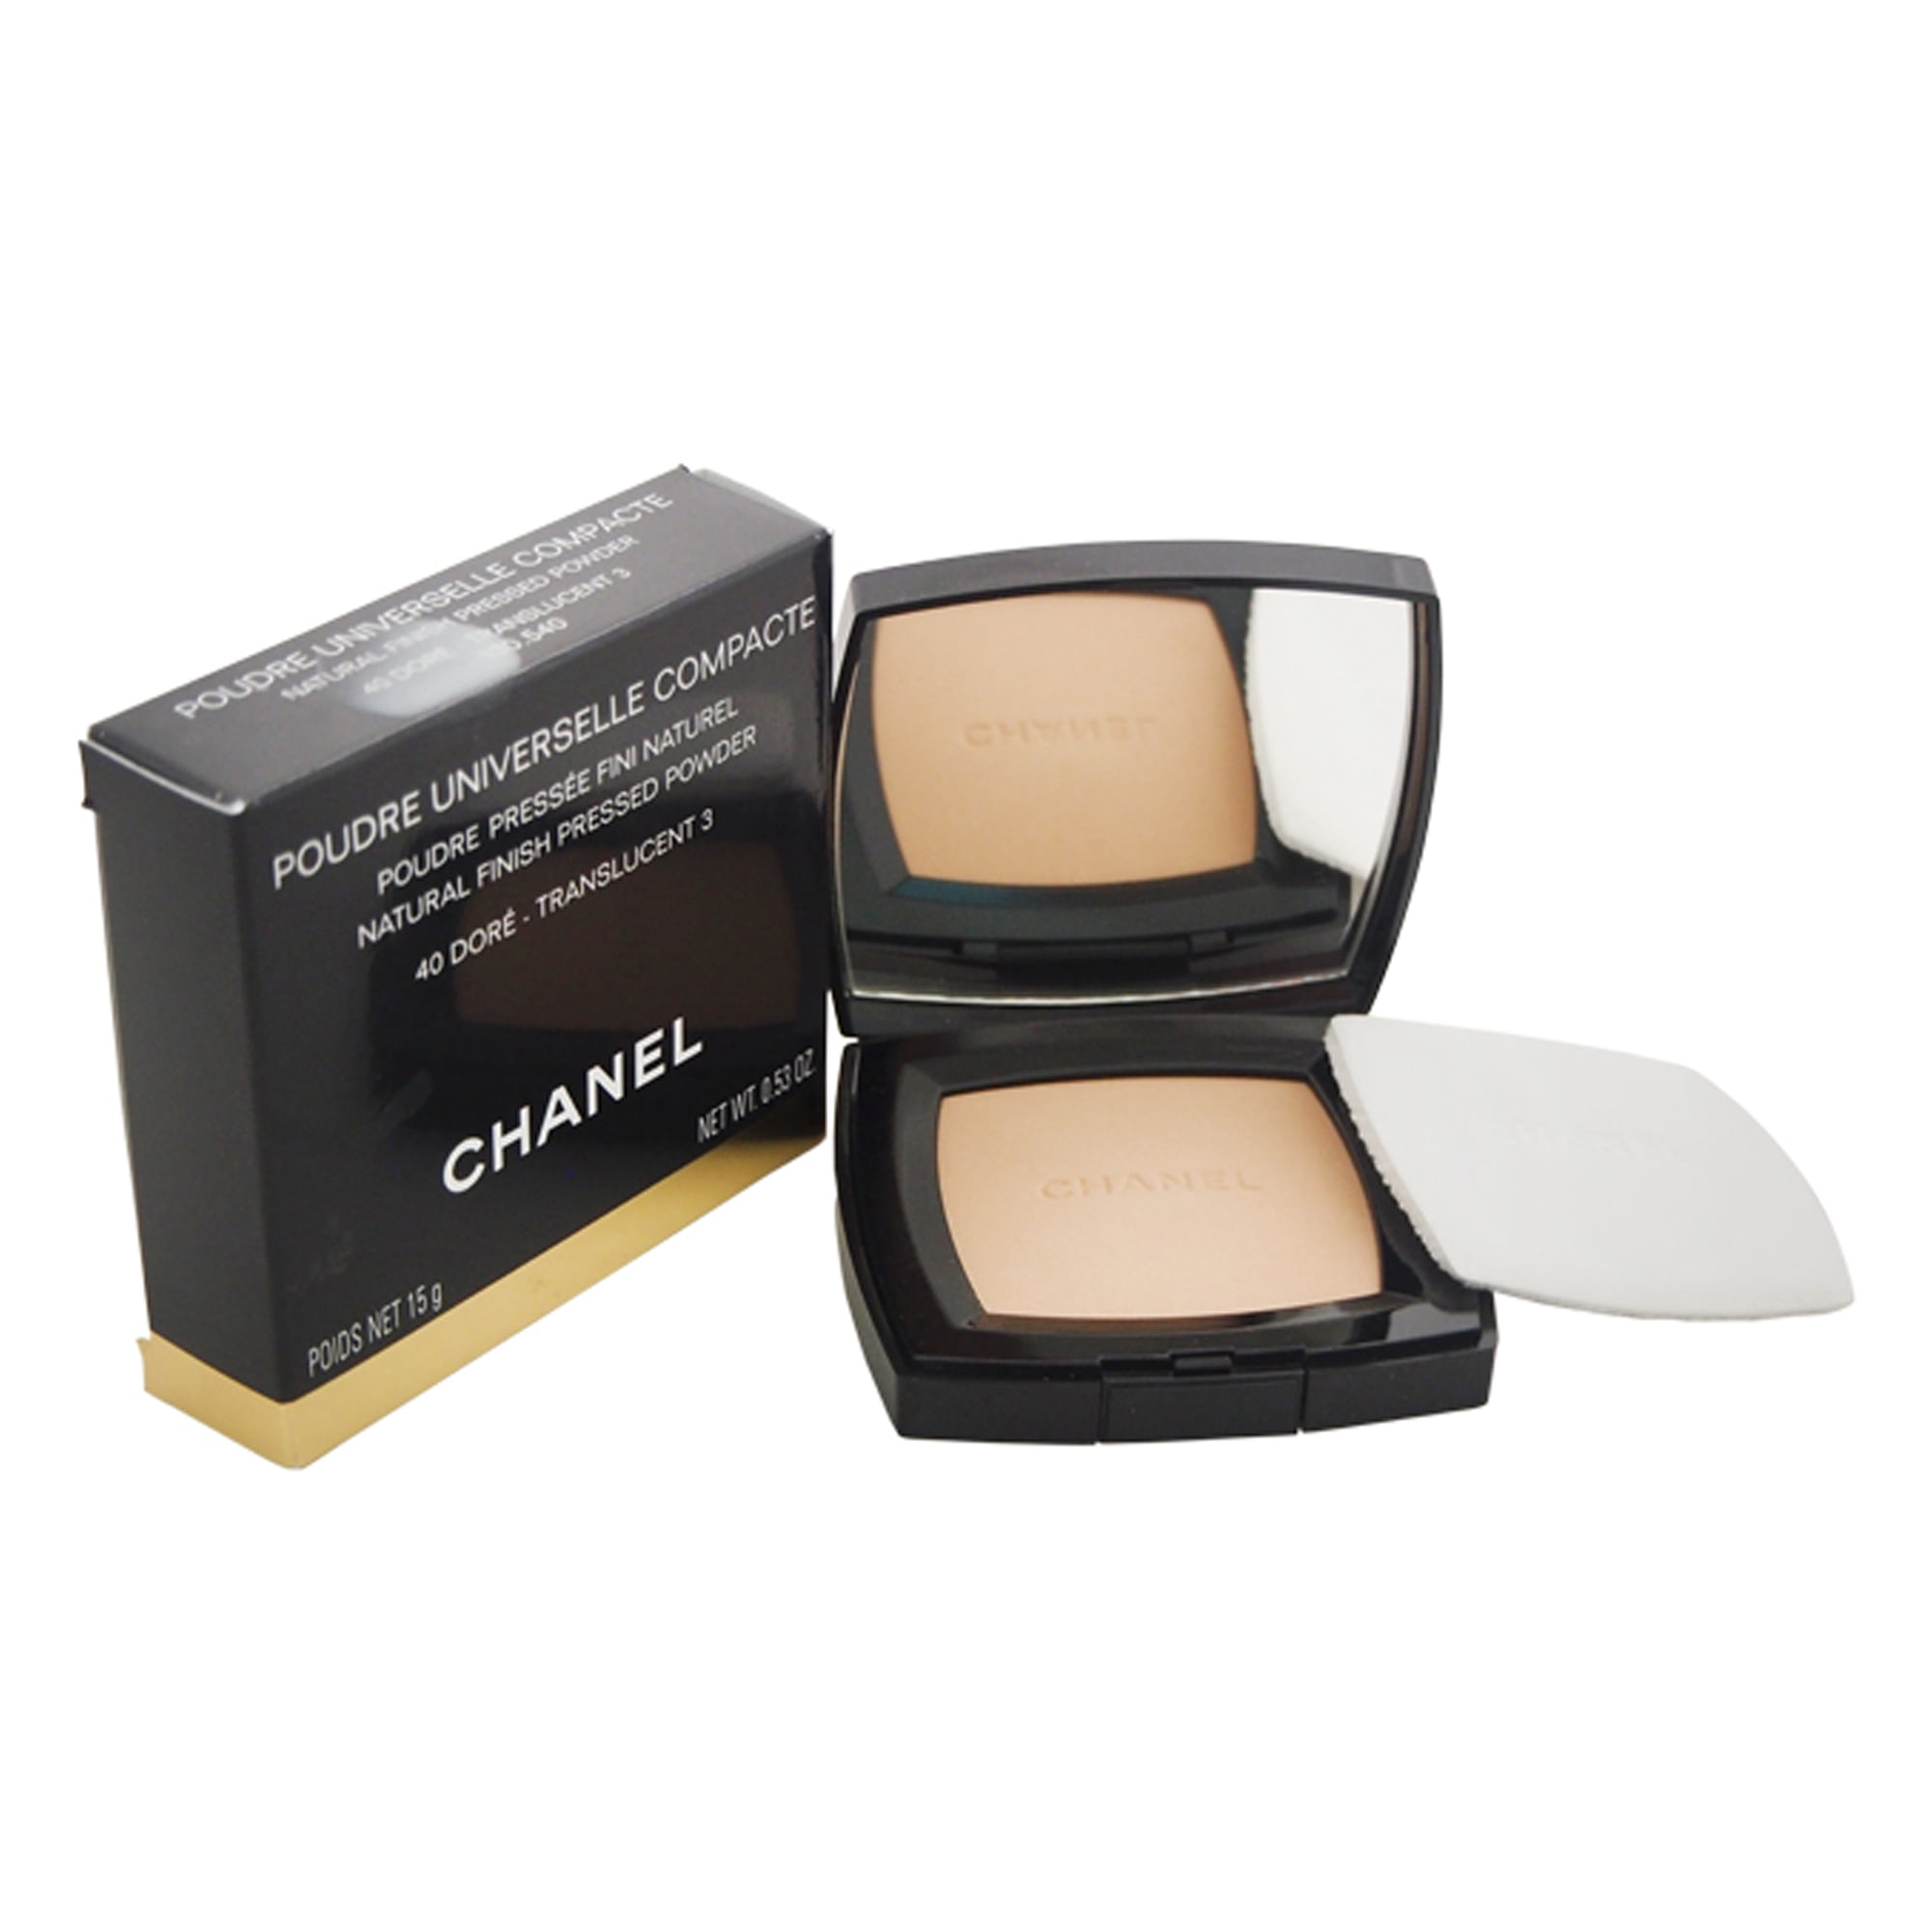 Poudre Universelle Compacte - 40 Dore Translucent 3 by Chanel for Women -   oz Powder | Walmart Canada